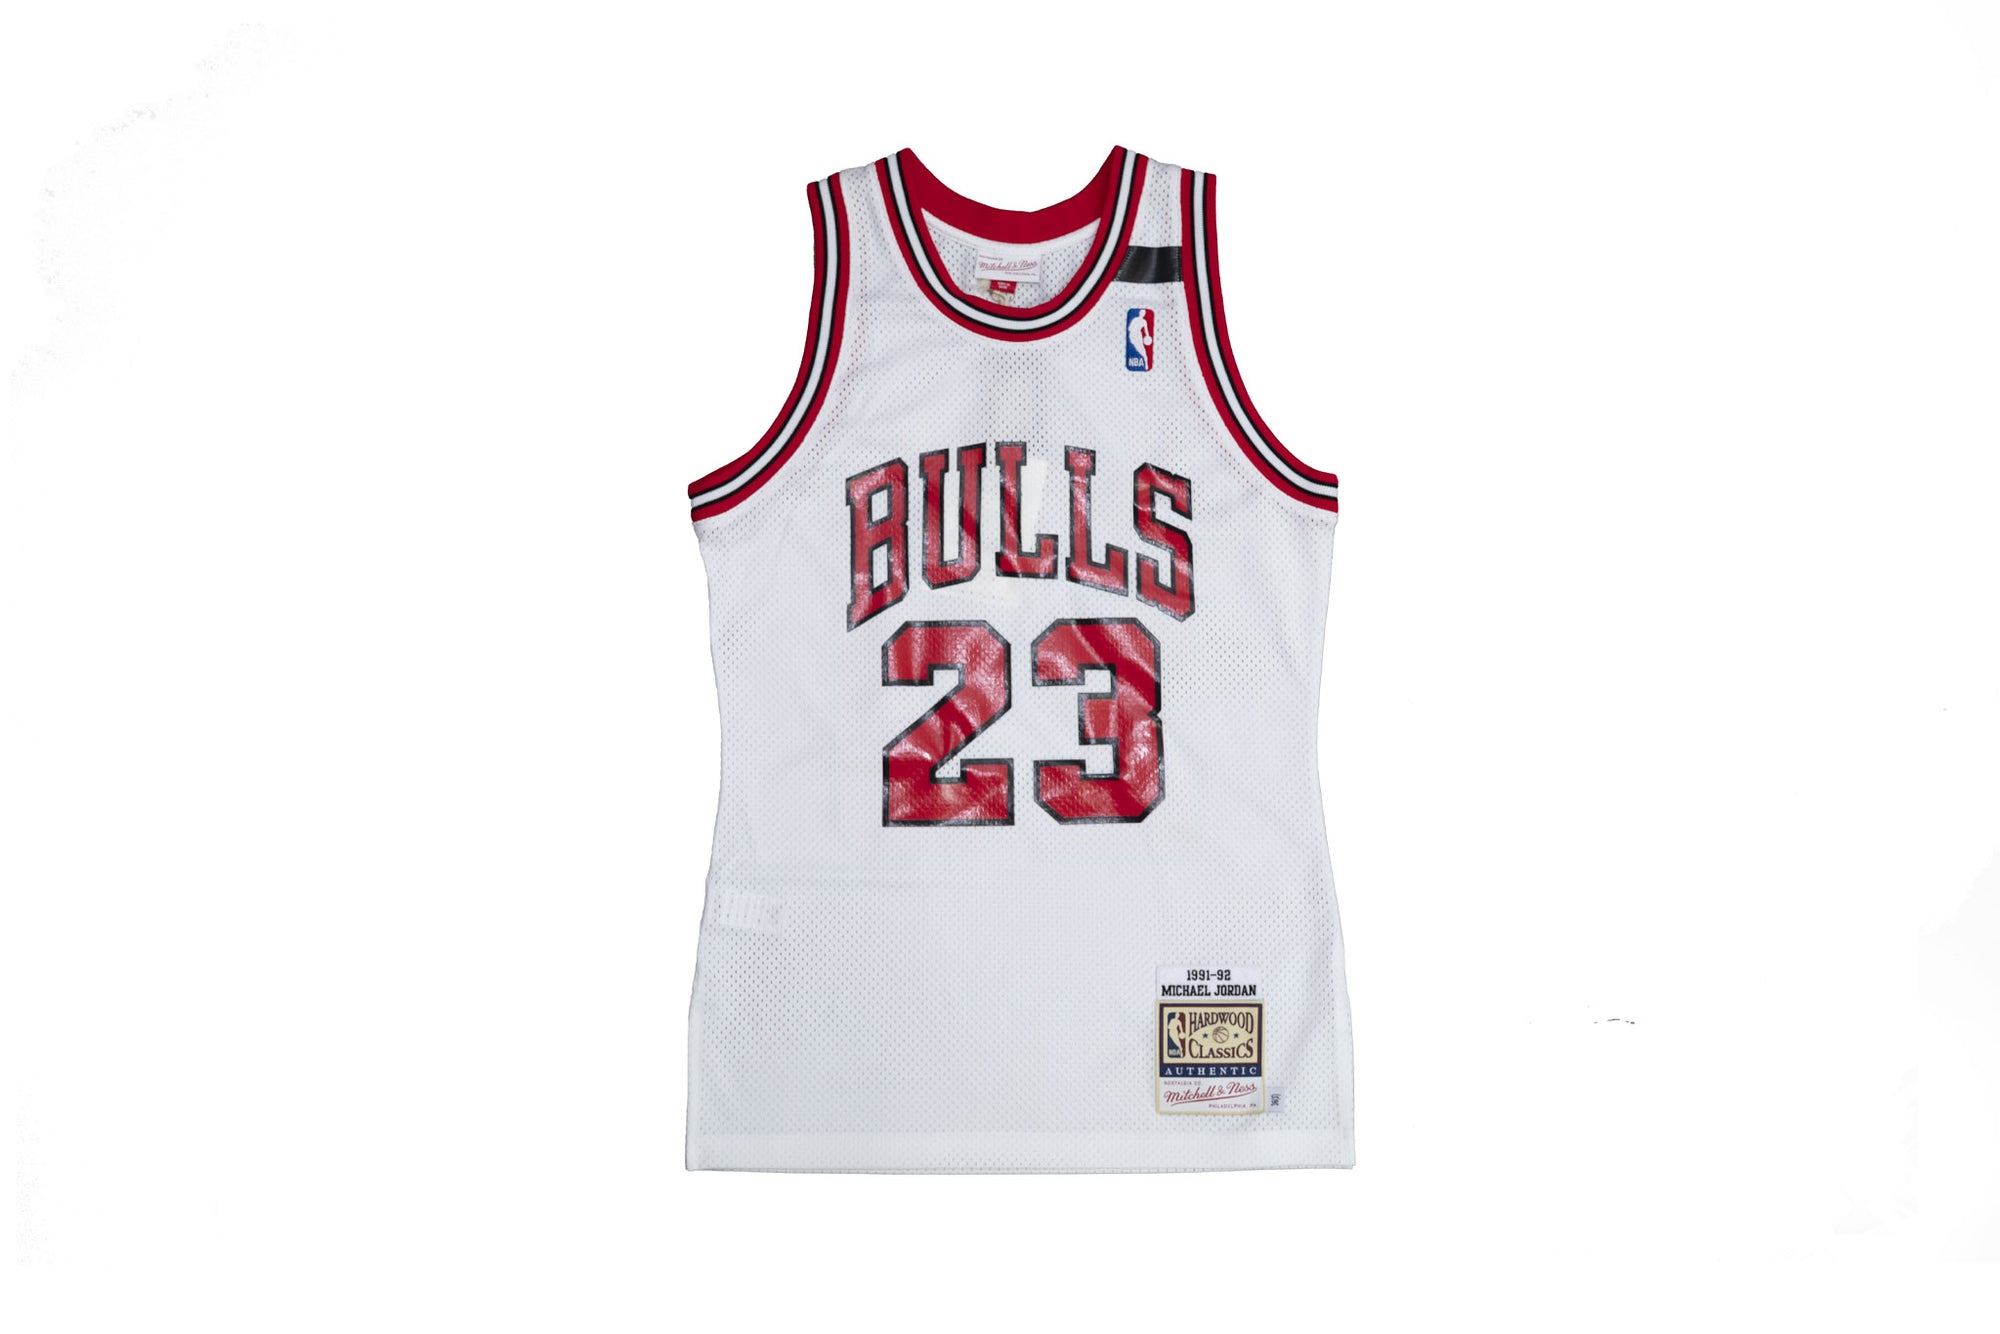 Mitchell & Ness, Shirts, Michael Jordan Chicago Bulls Pinstripe Jersey